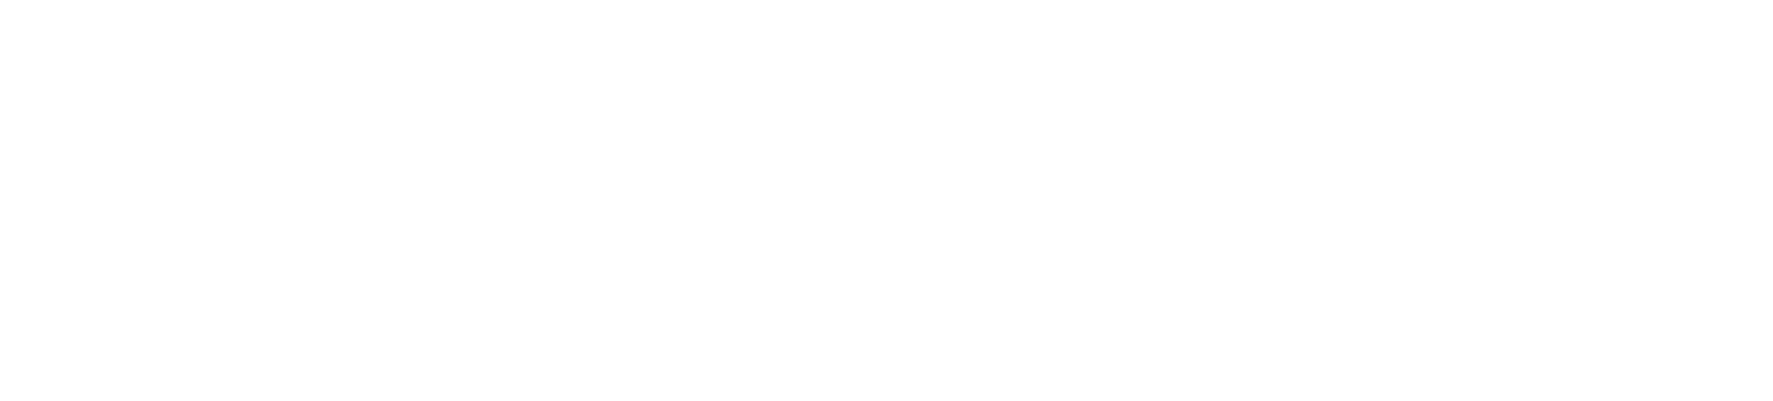 Newlite Lighting Technology